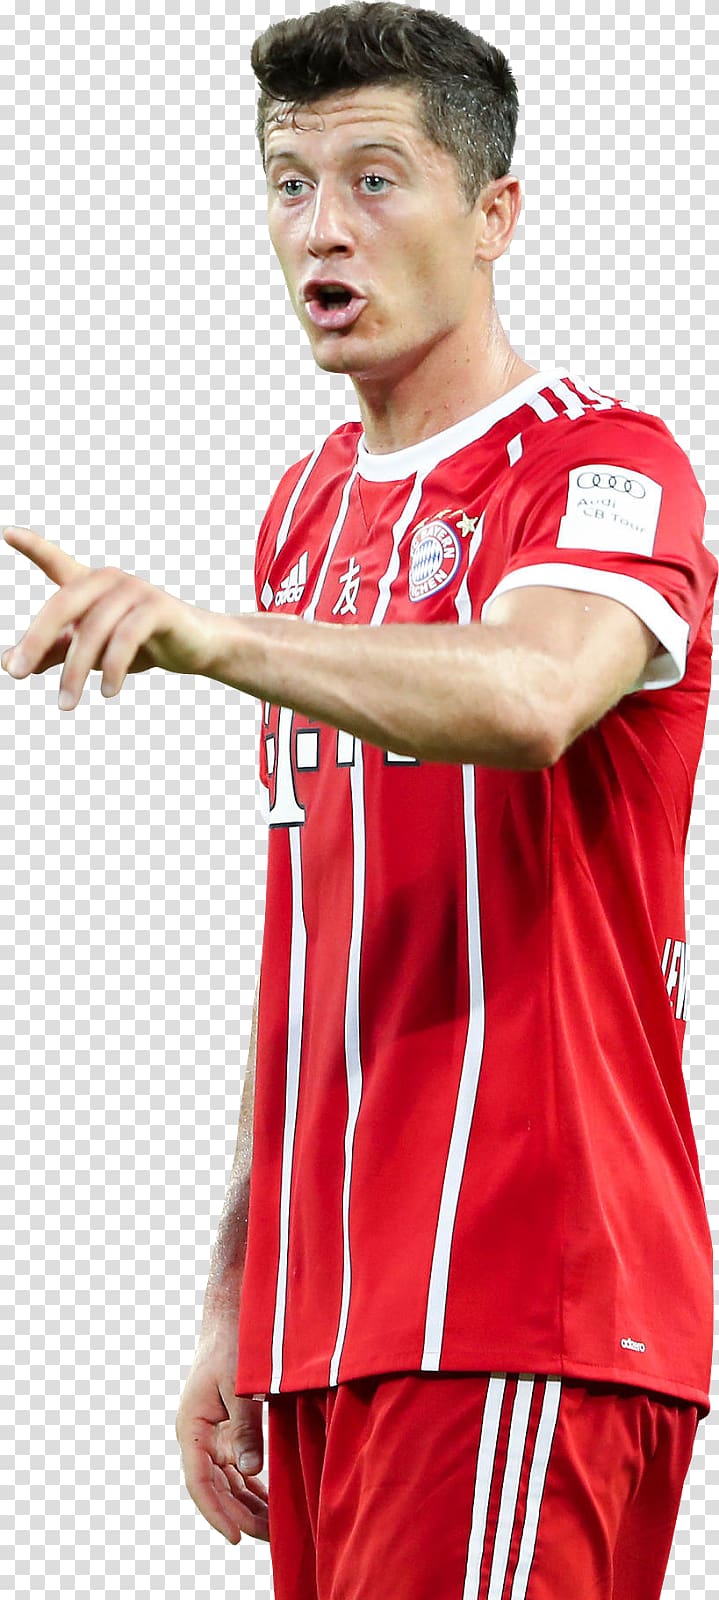 Robert Lewandowski FC Bayern Munich Soccer player Football player, Robert Lewandowski transparent background PNG clipart